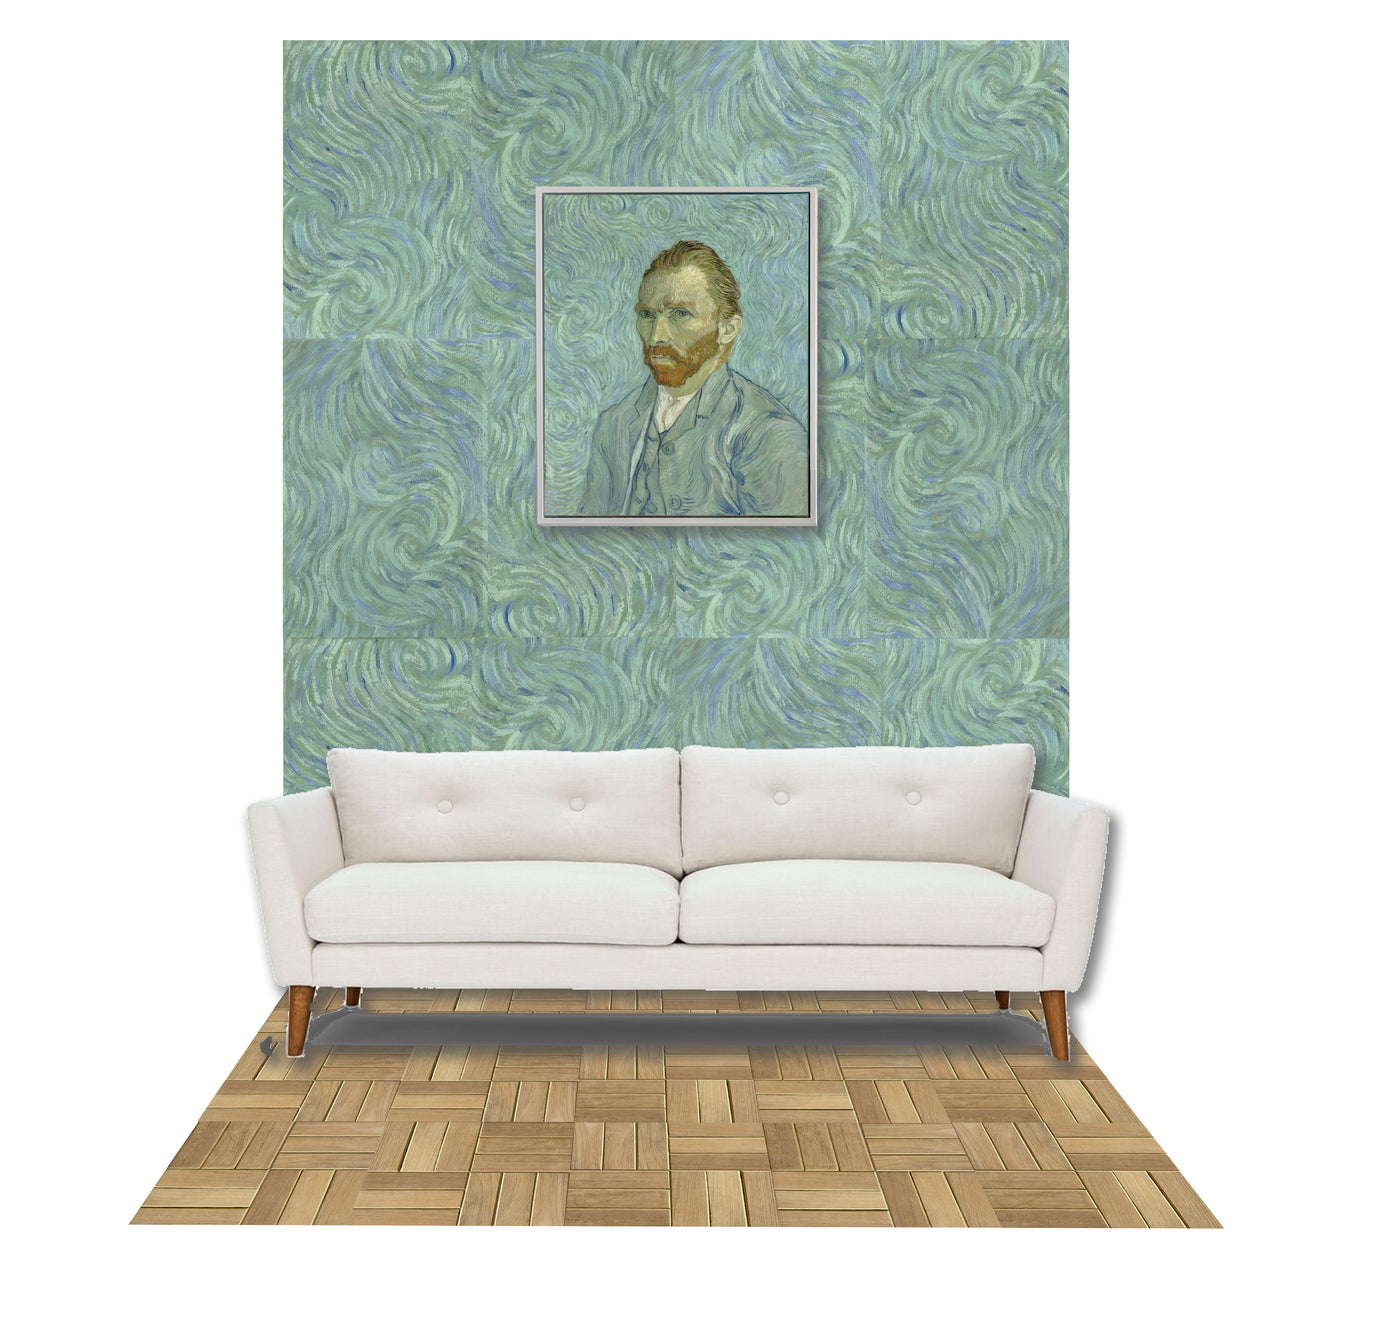 Van Gogh Blue Stroke Wallpaper Sheets